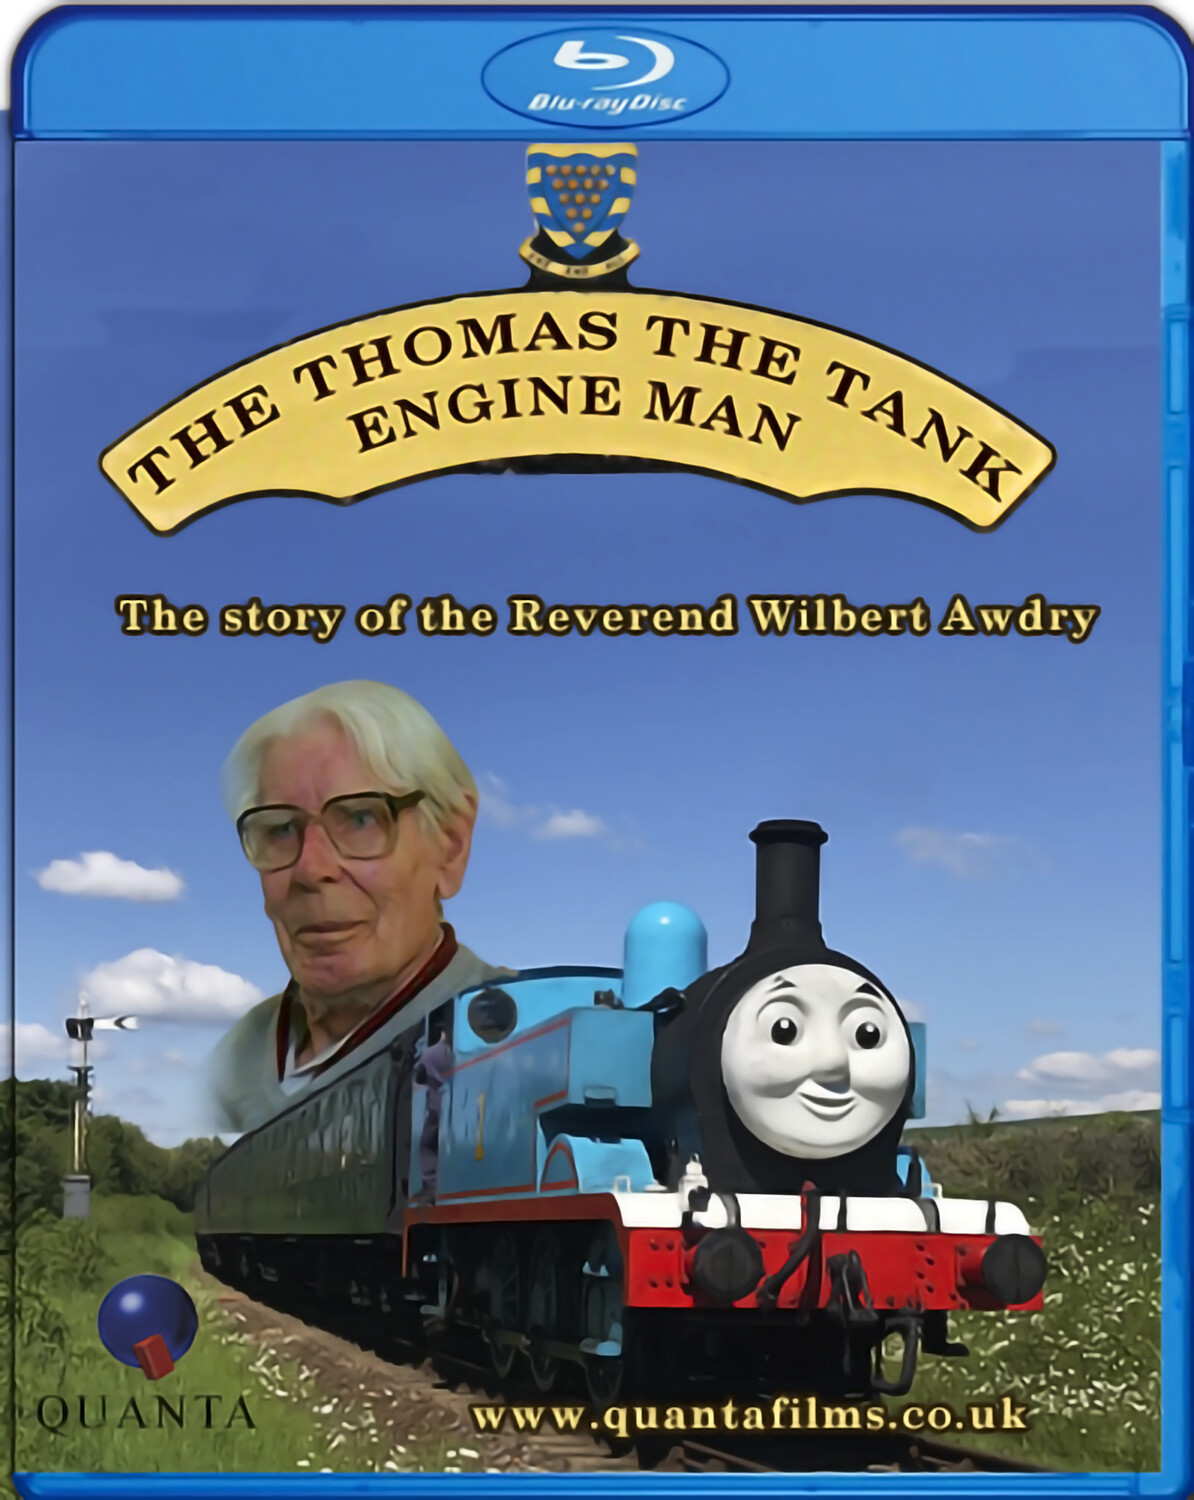 THE THOMAS THE TANK ENGINE MAN (Blu-ray)